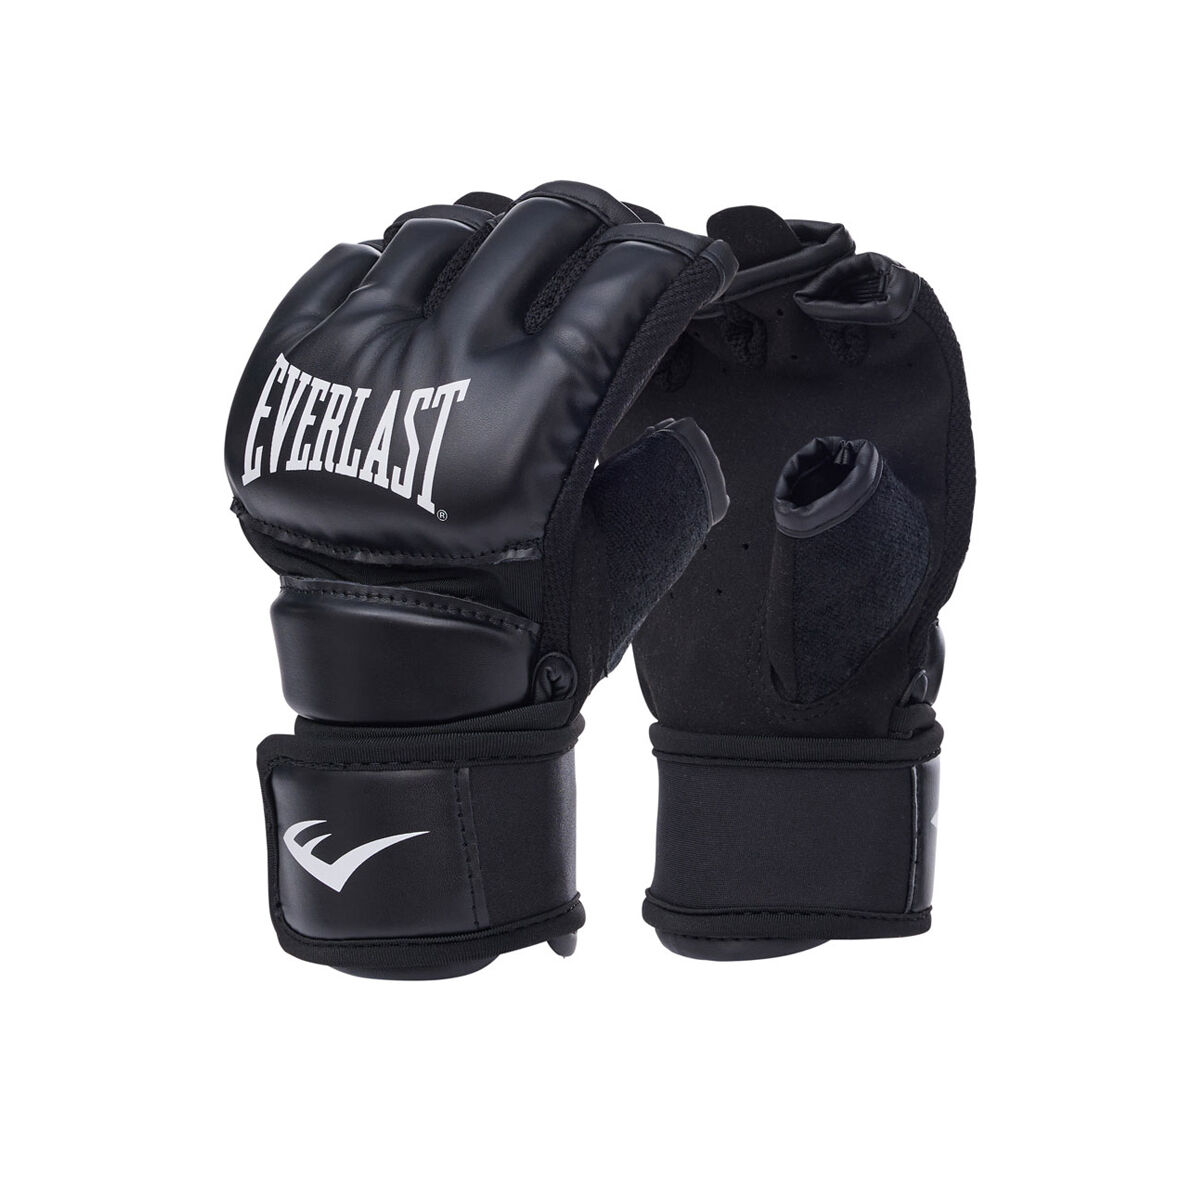 Everlast: Clothing, Footwear, Equipment, Fitness, MMA